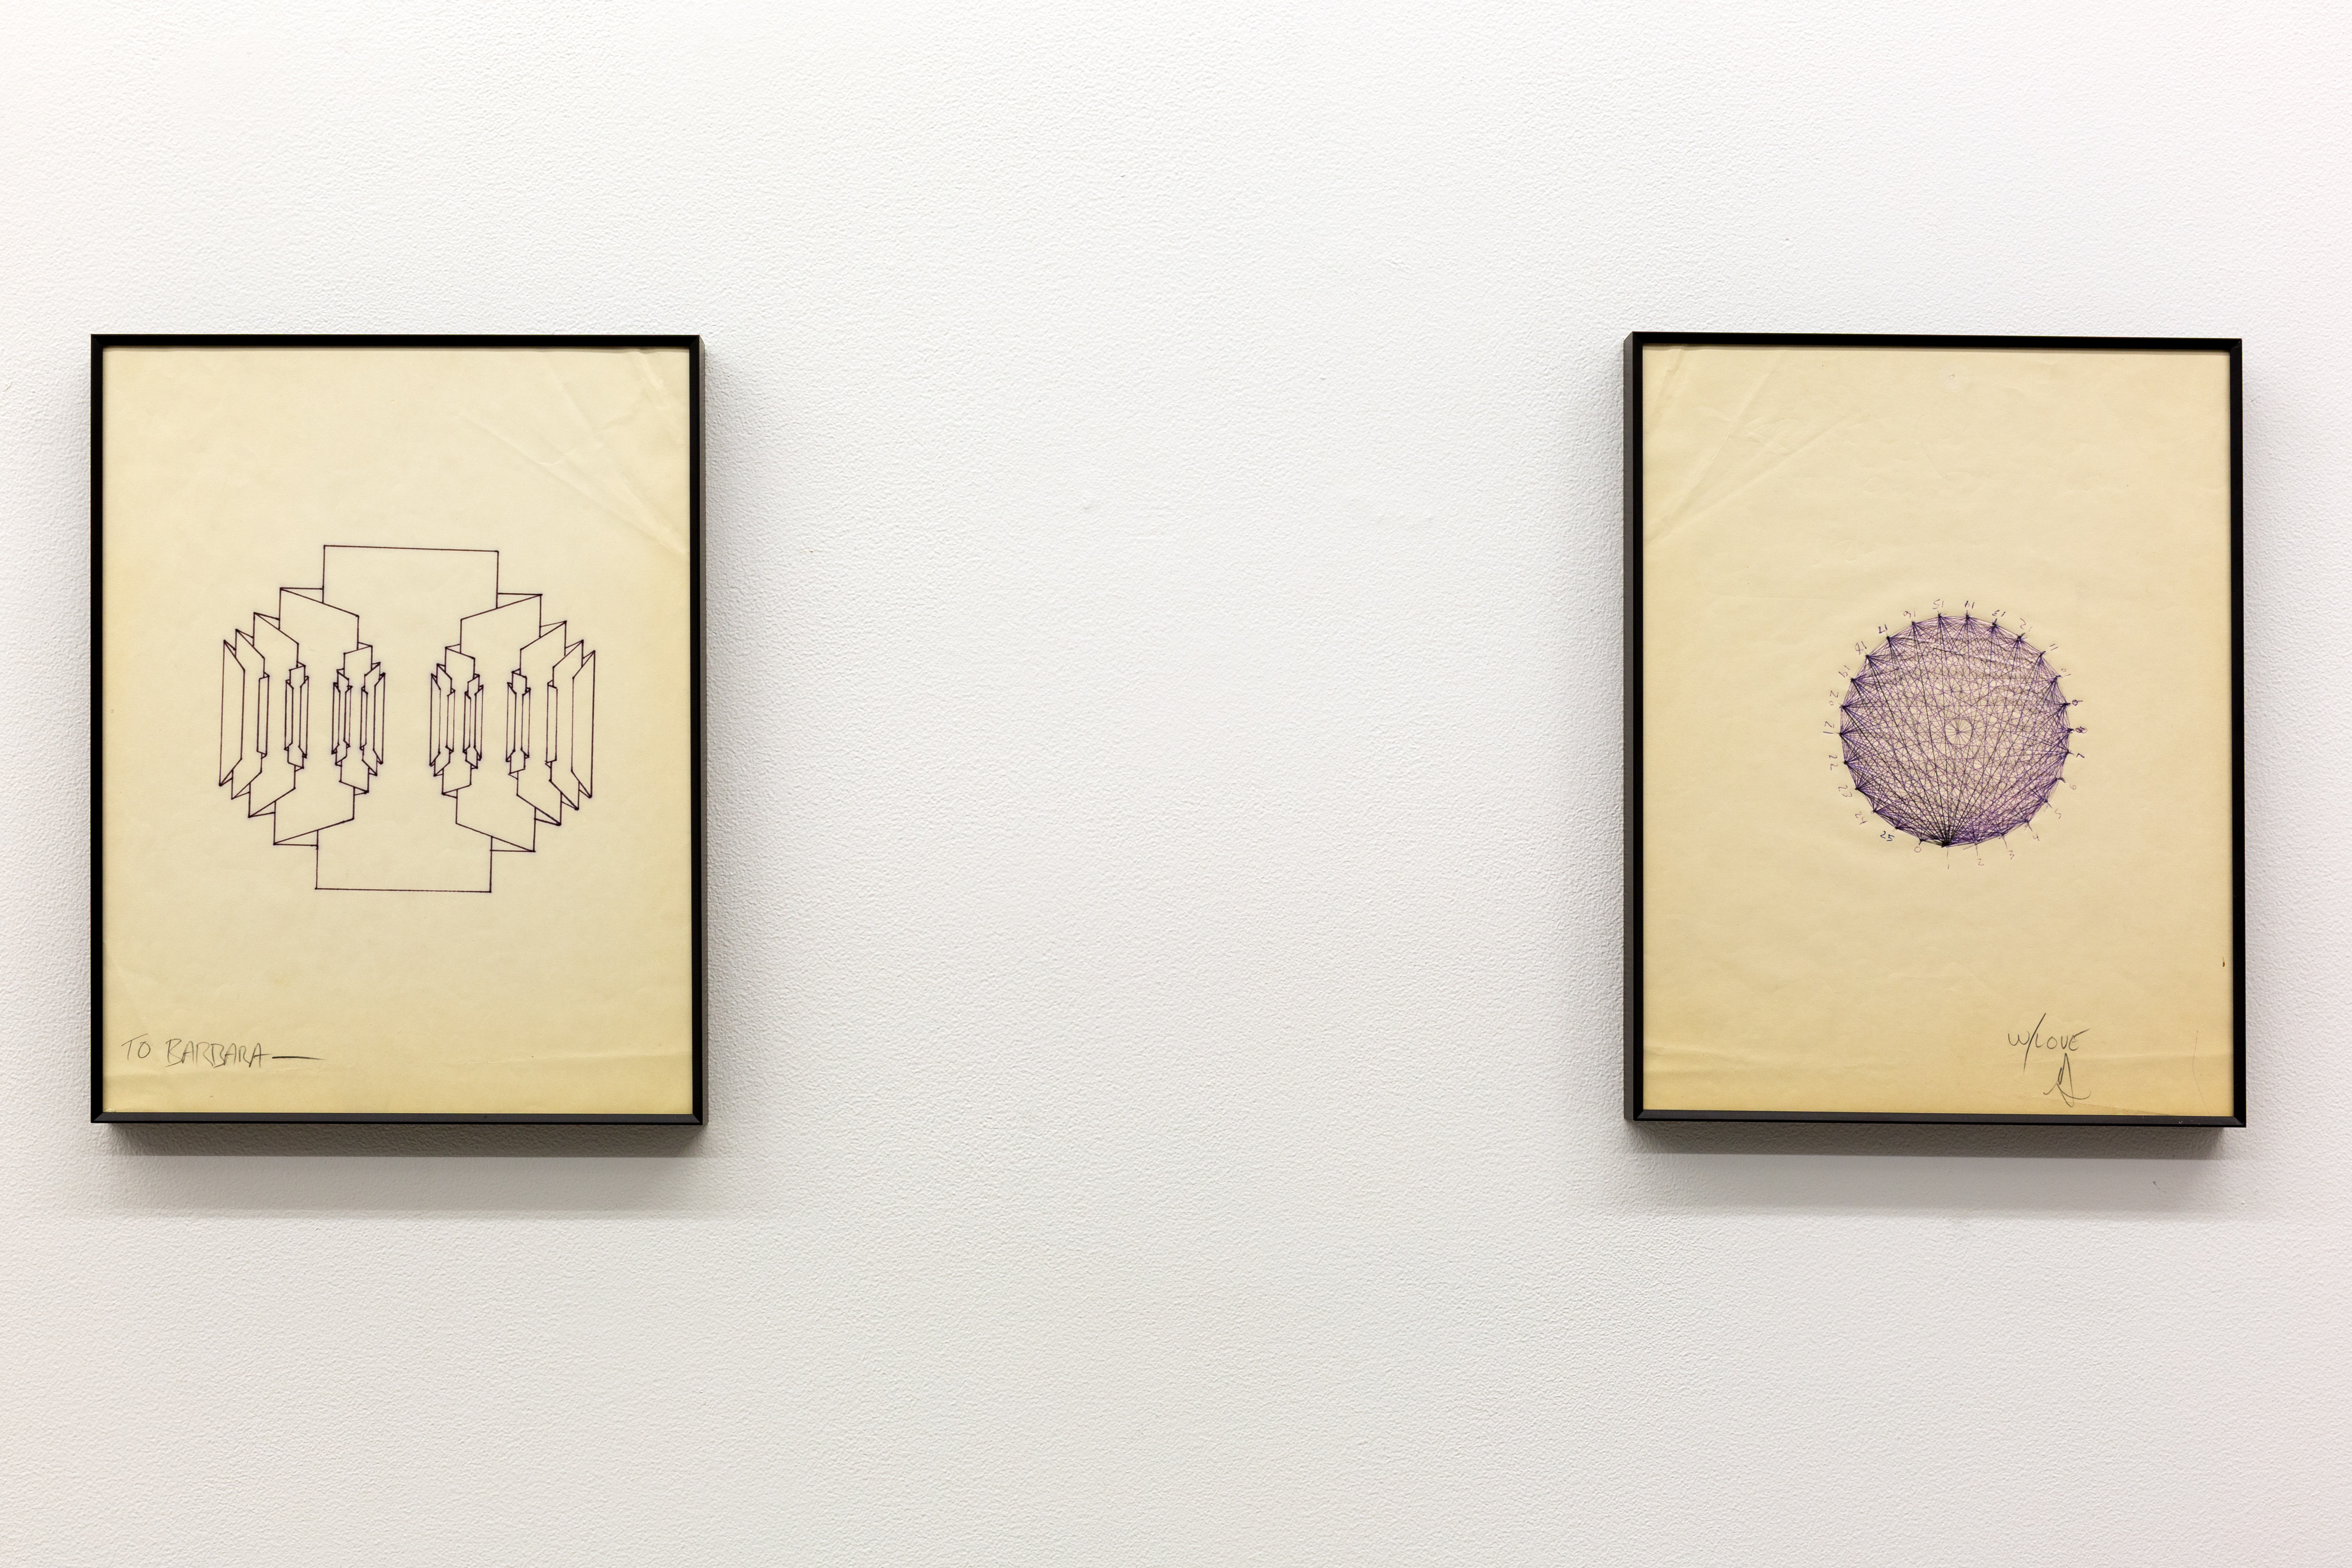 Glenn Branca, Untitled (to Barbara), c. 1980s, Ink on paper, 11h x 8.50w in. (Left) and Untitled (w/love), c. 1980s, Ink on paper, 11h x 8.50w in.